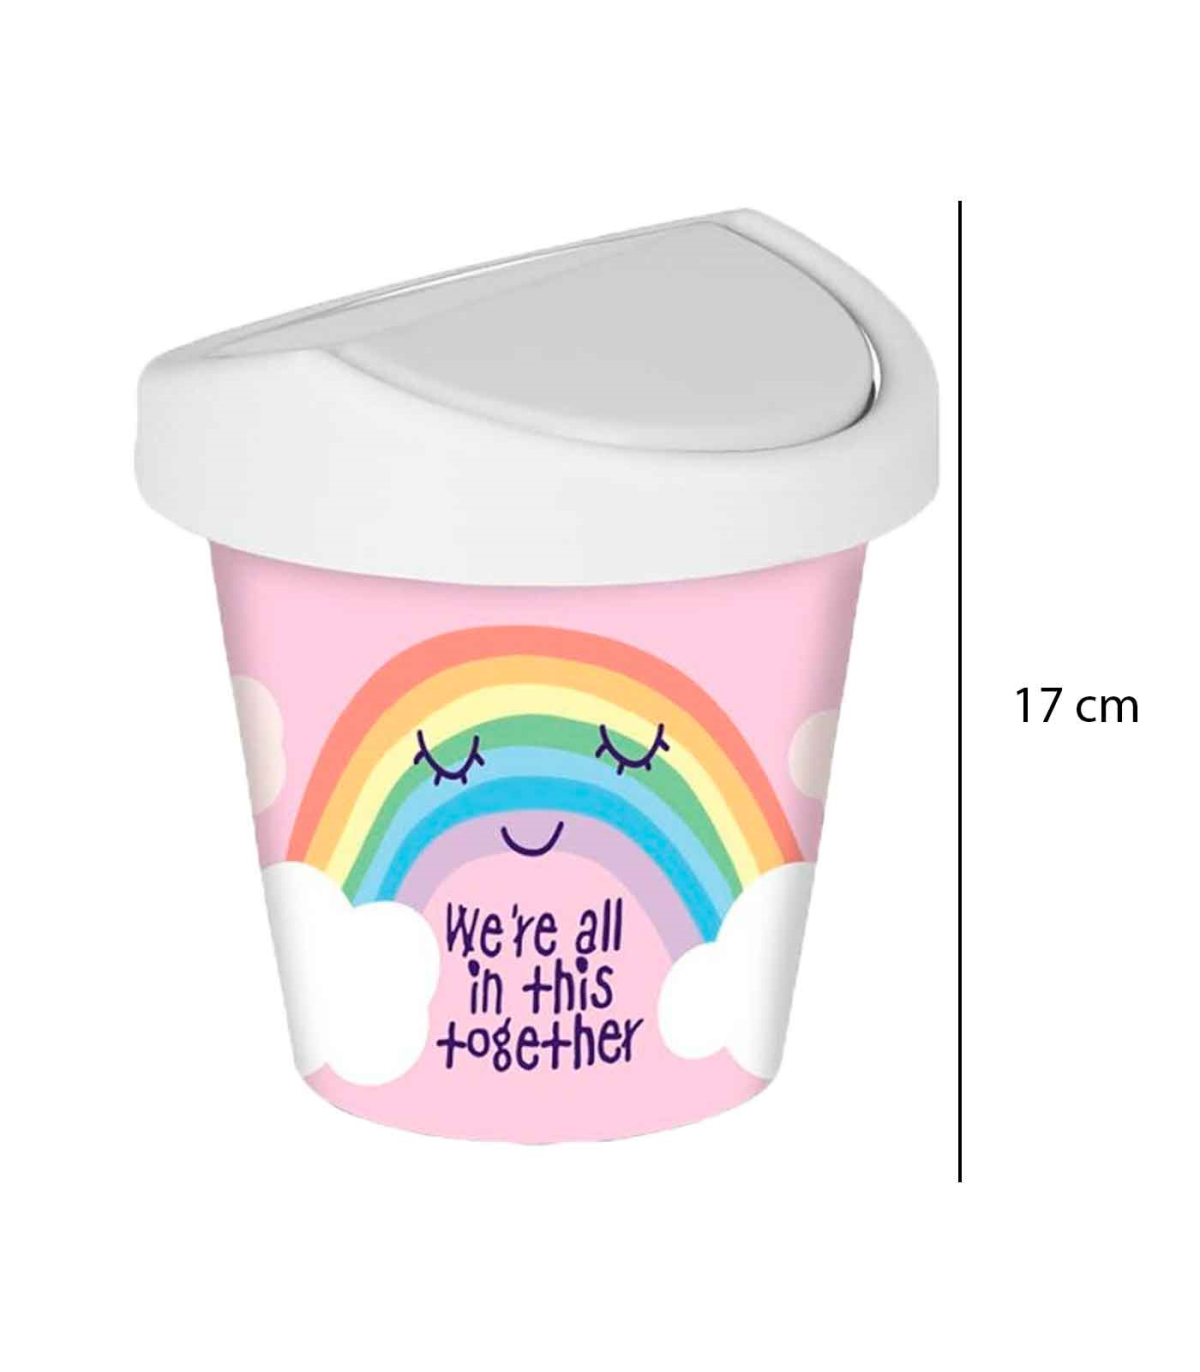  Cubo de basura pequeño con tapa, forma de arco iris, medio  círculo, colores pastel, neón, espectro colorido, cubo de basura redondo, a  prueba de perros, papelera para cocina, baño, sala de